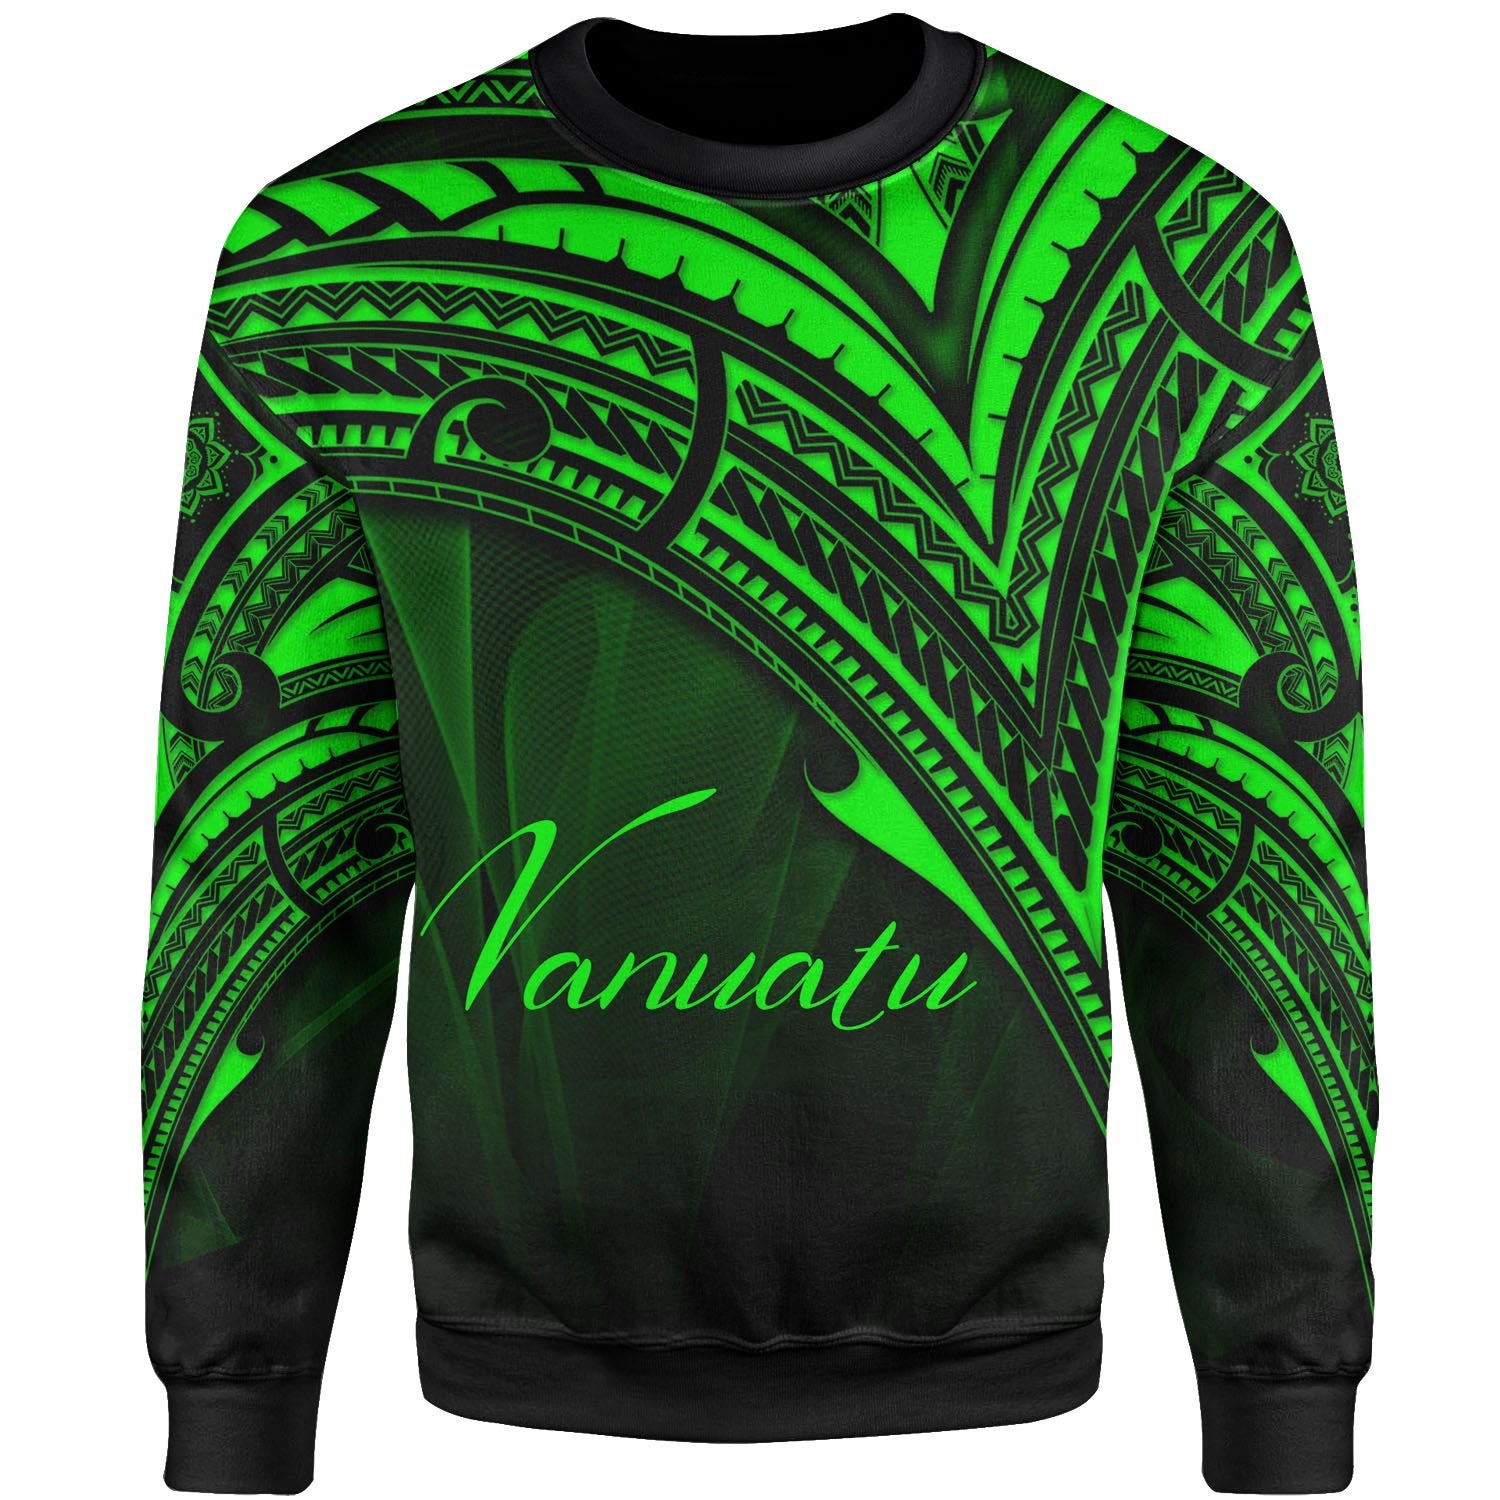 Vanuatu Sweatshirt - Cross Style Green Color Unisex Black - Polynesian Pride